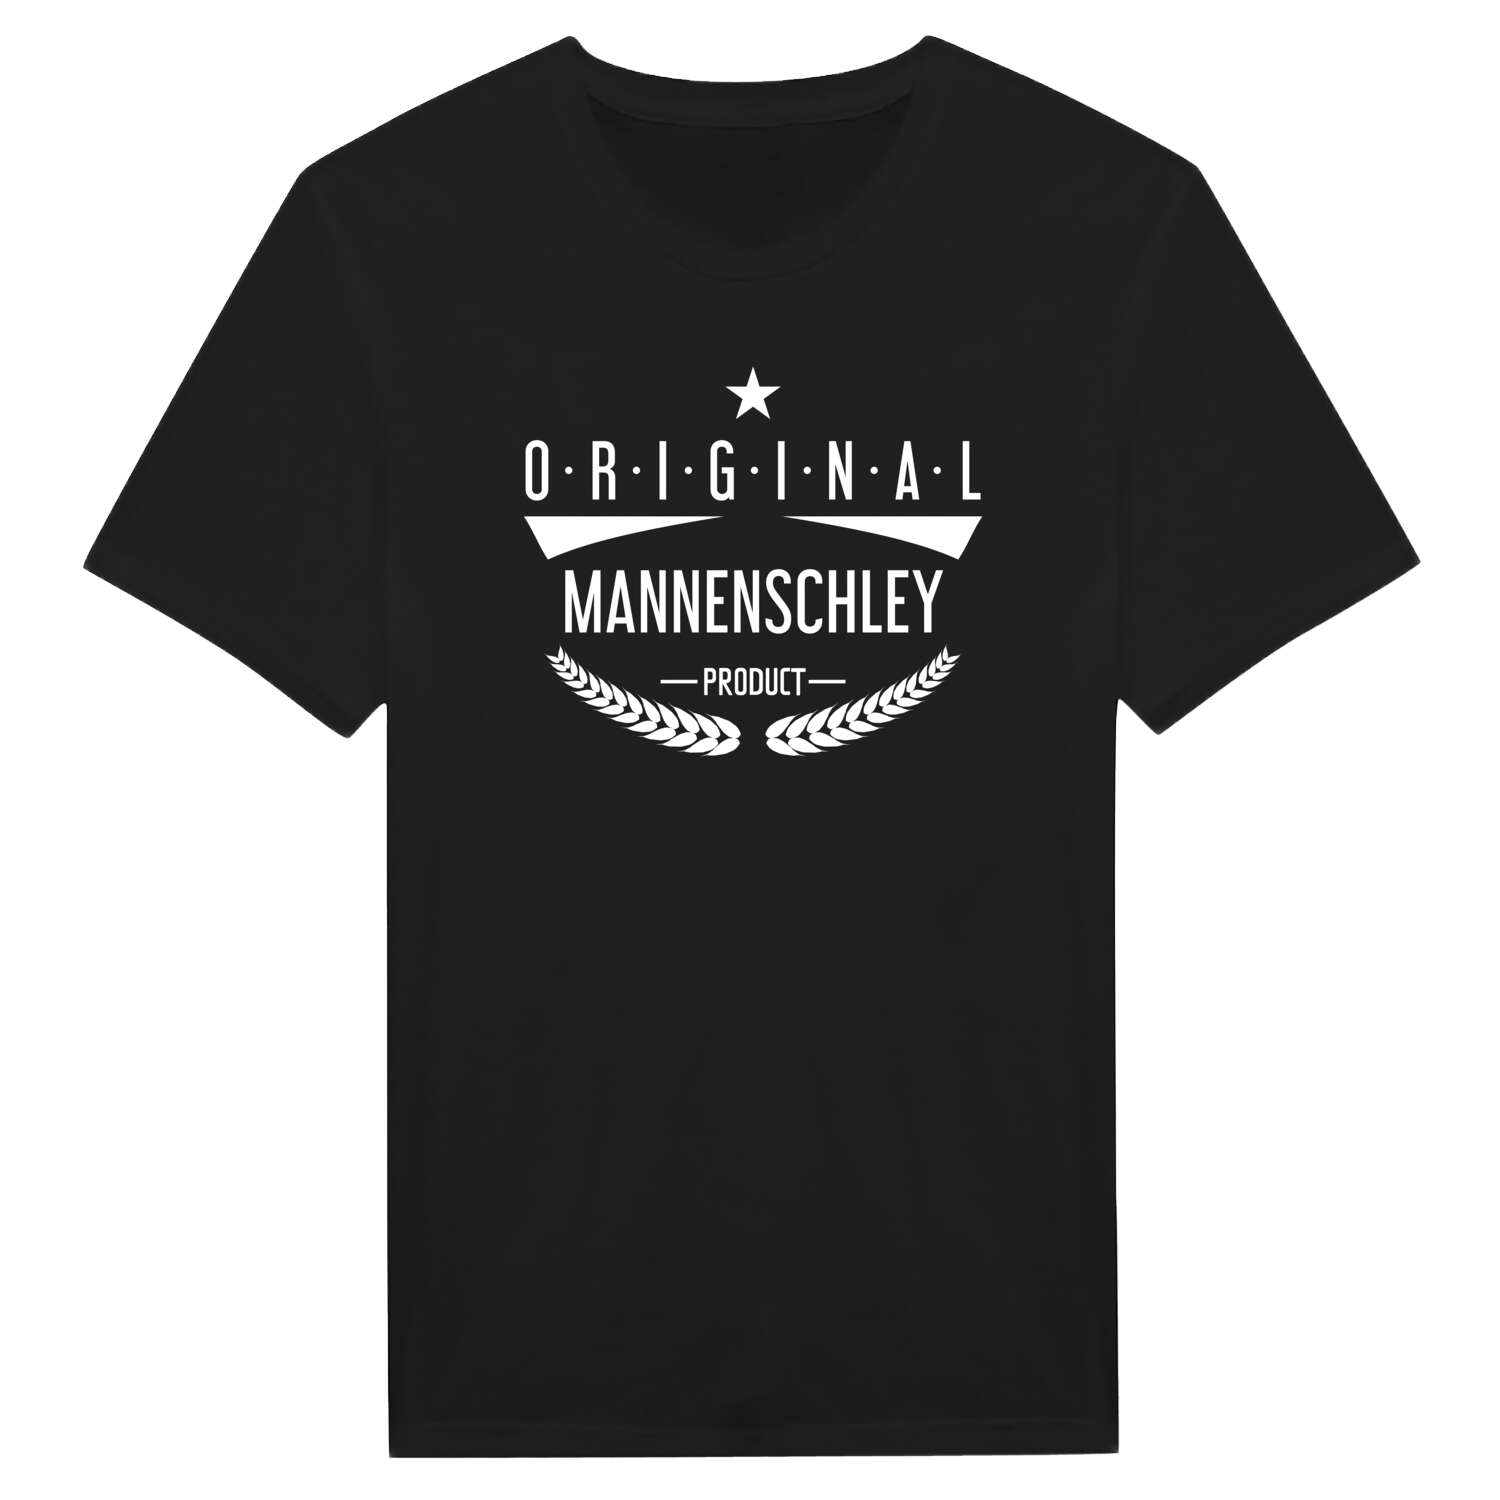 Mannenschley T-Shirt »Original Product«